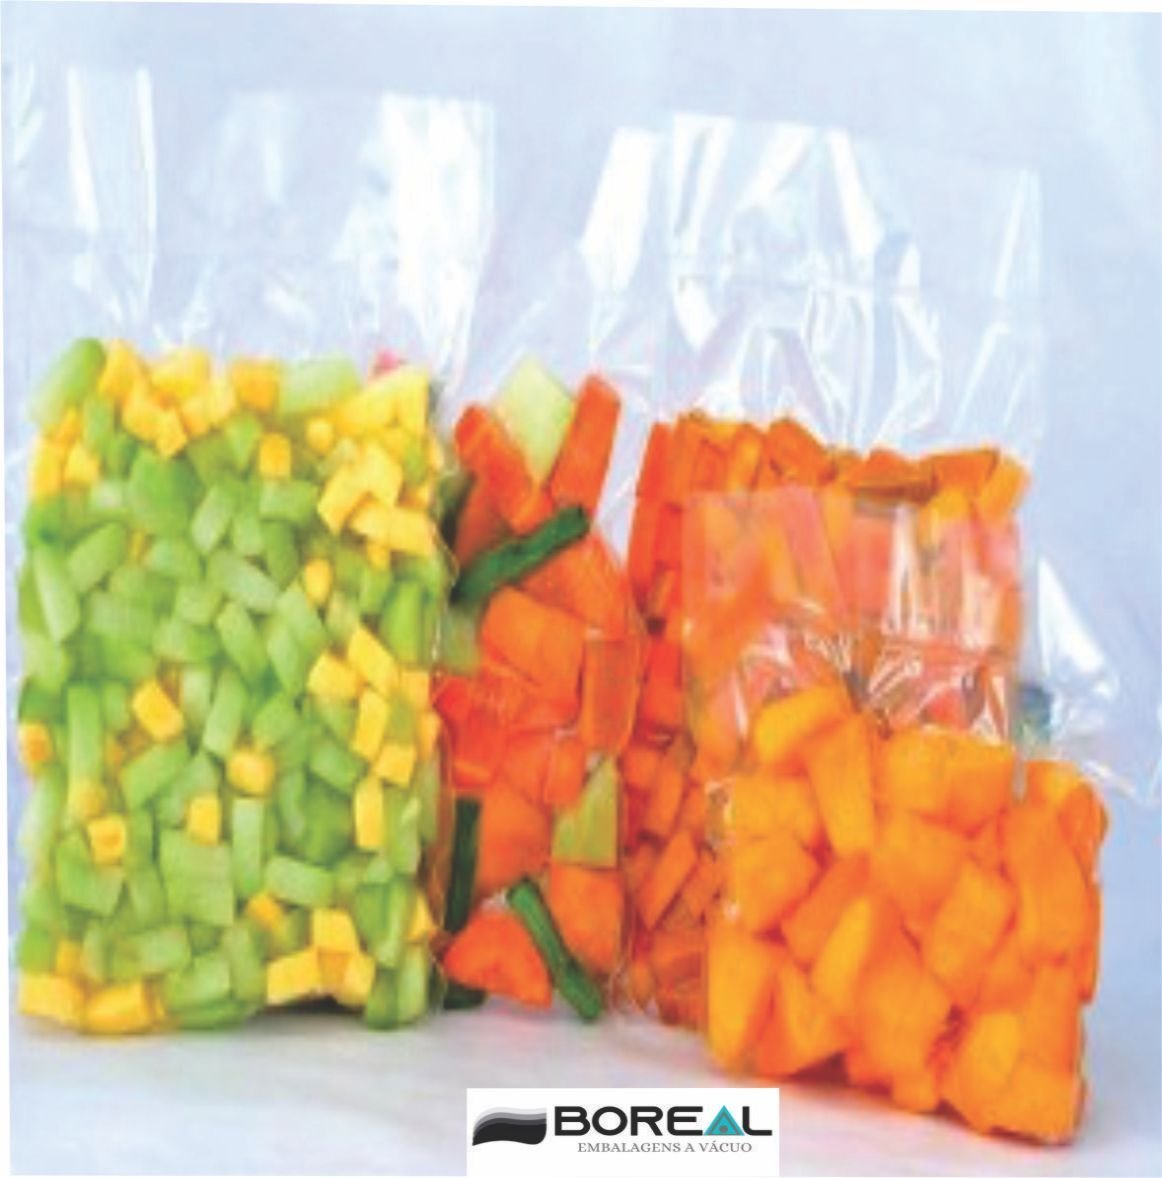 Saco de Embalagem a Vácuo Nylon Poli 20x35 10 Micras - Kits Boreal Embalagens a Vácuo Embalagem a Vá - 7